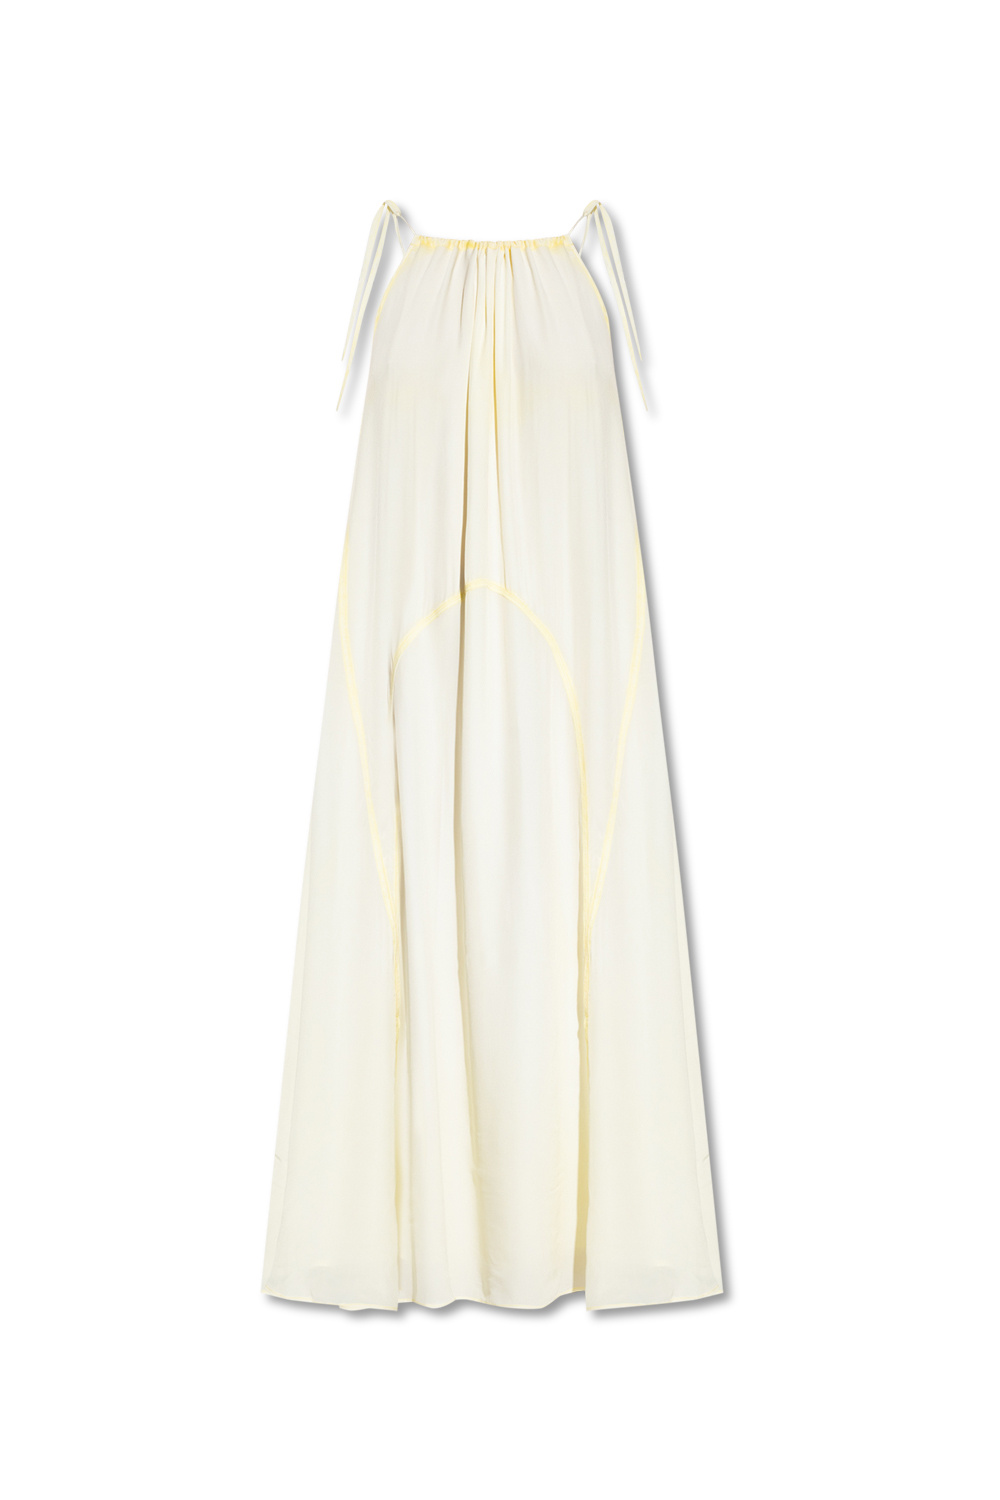 AllSaints ‘Aida’ sleeveless dress